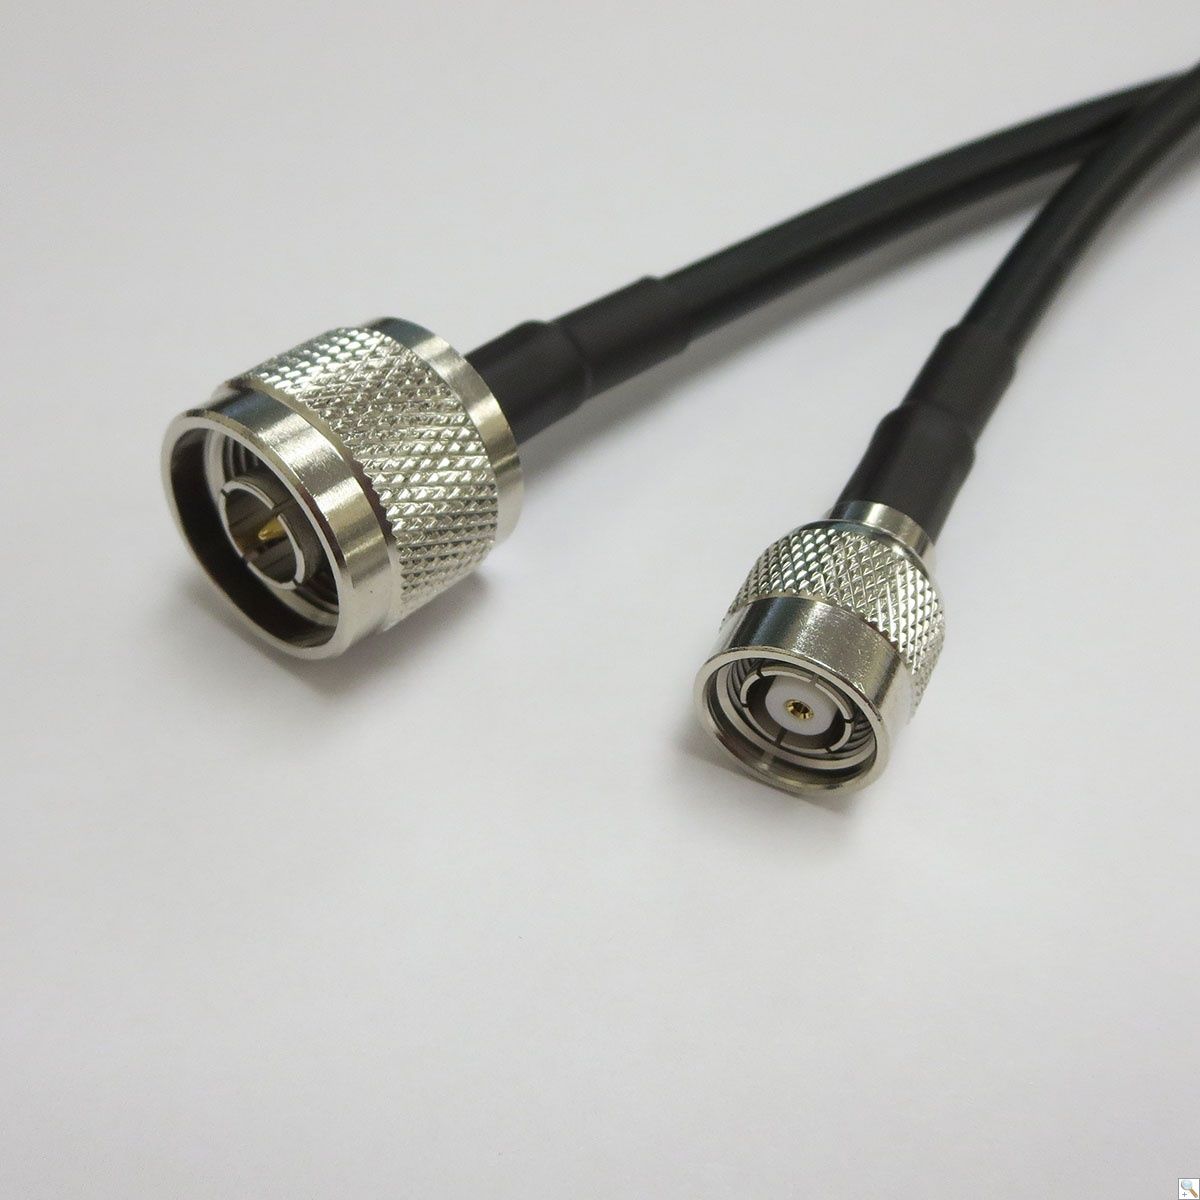 WiFIi/ RFID Antenna cable - TNC Reverse Polarity Plug - N Plug